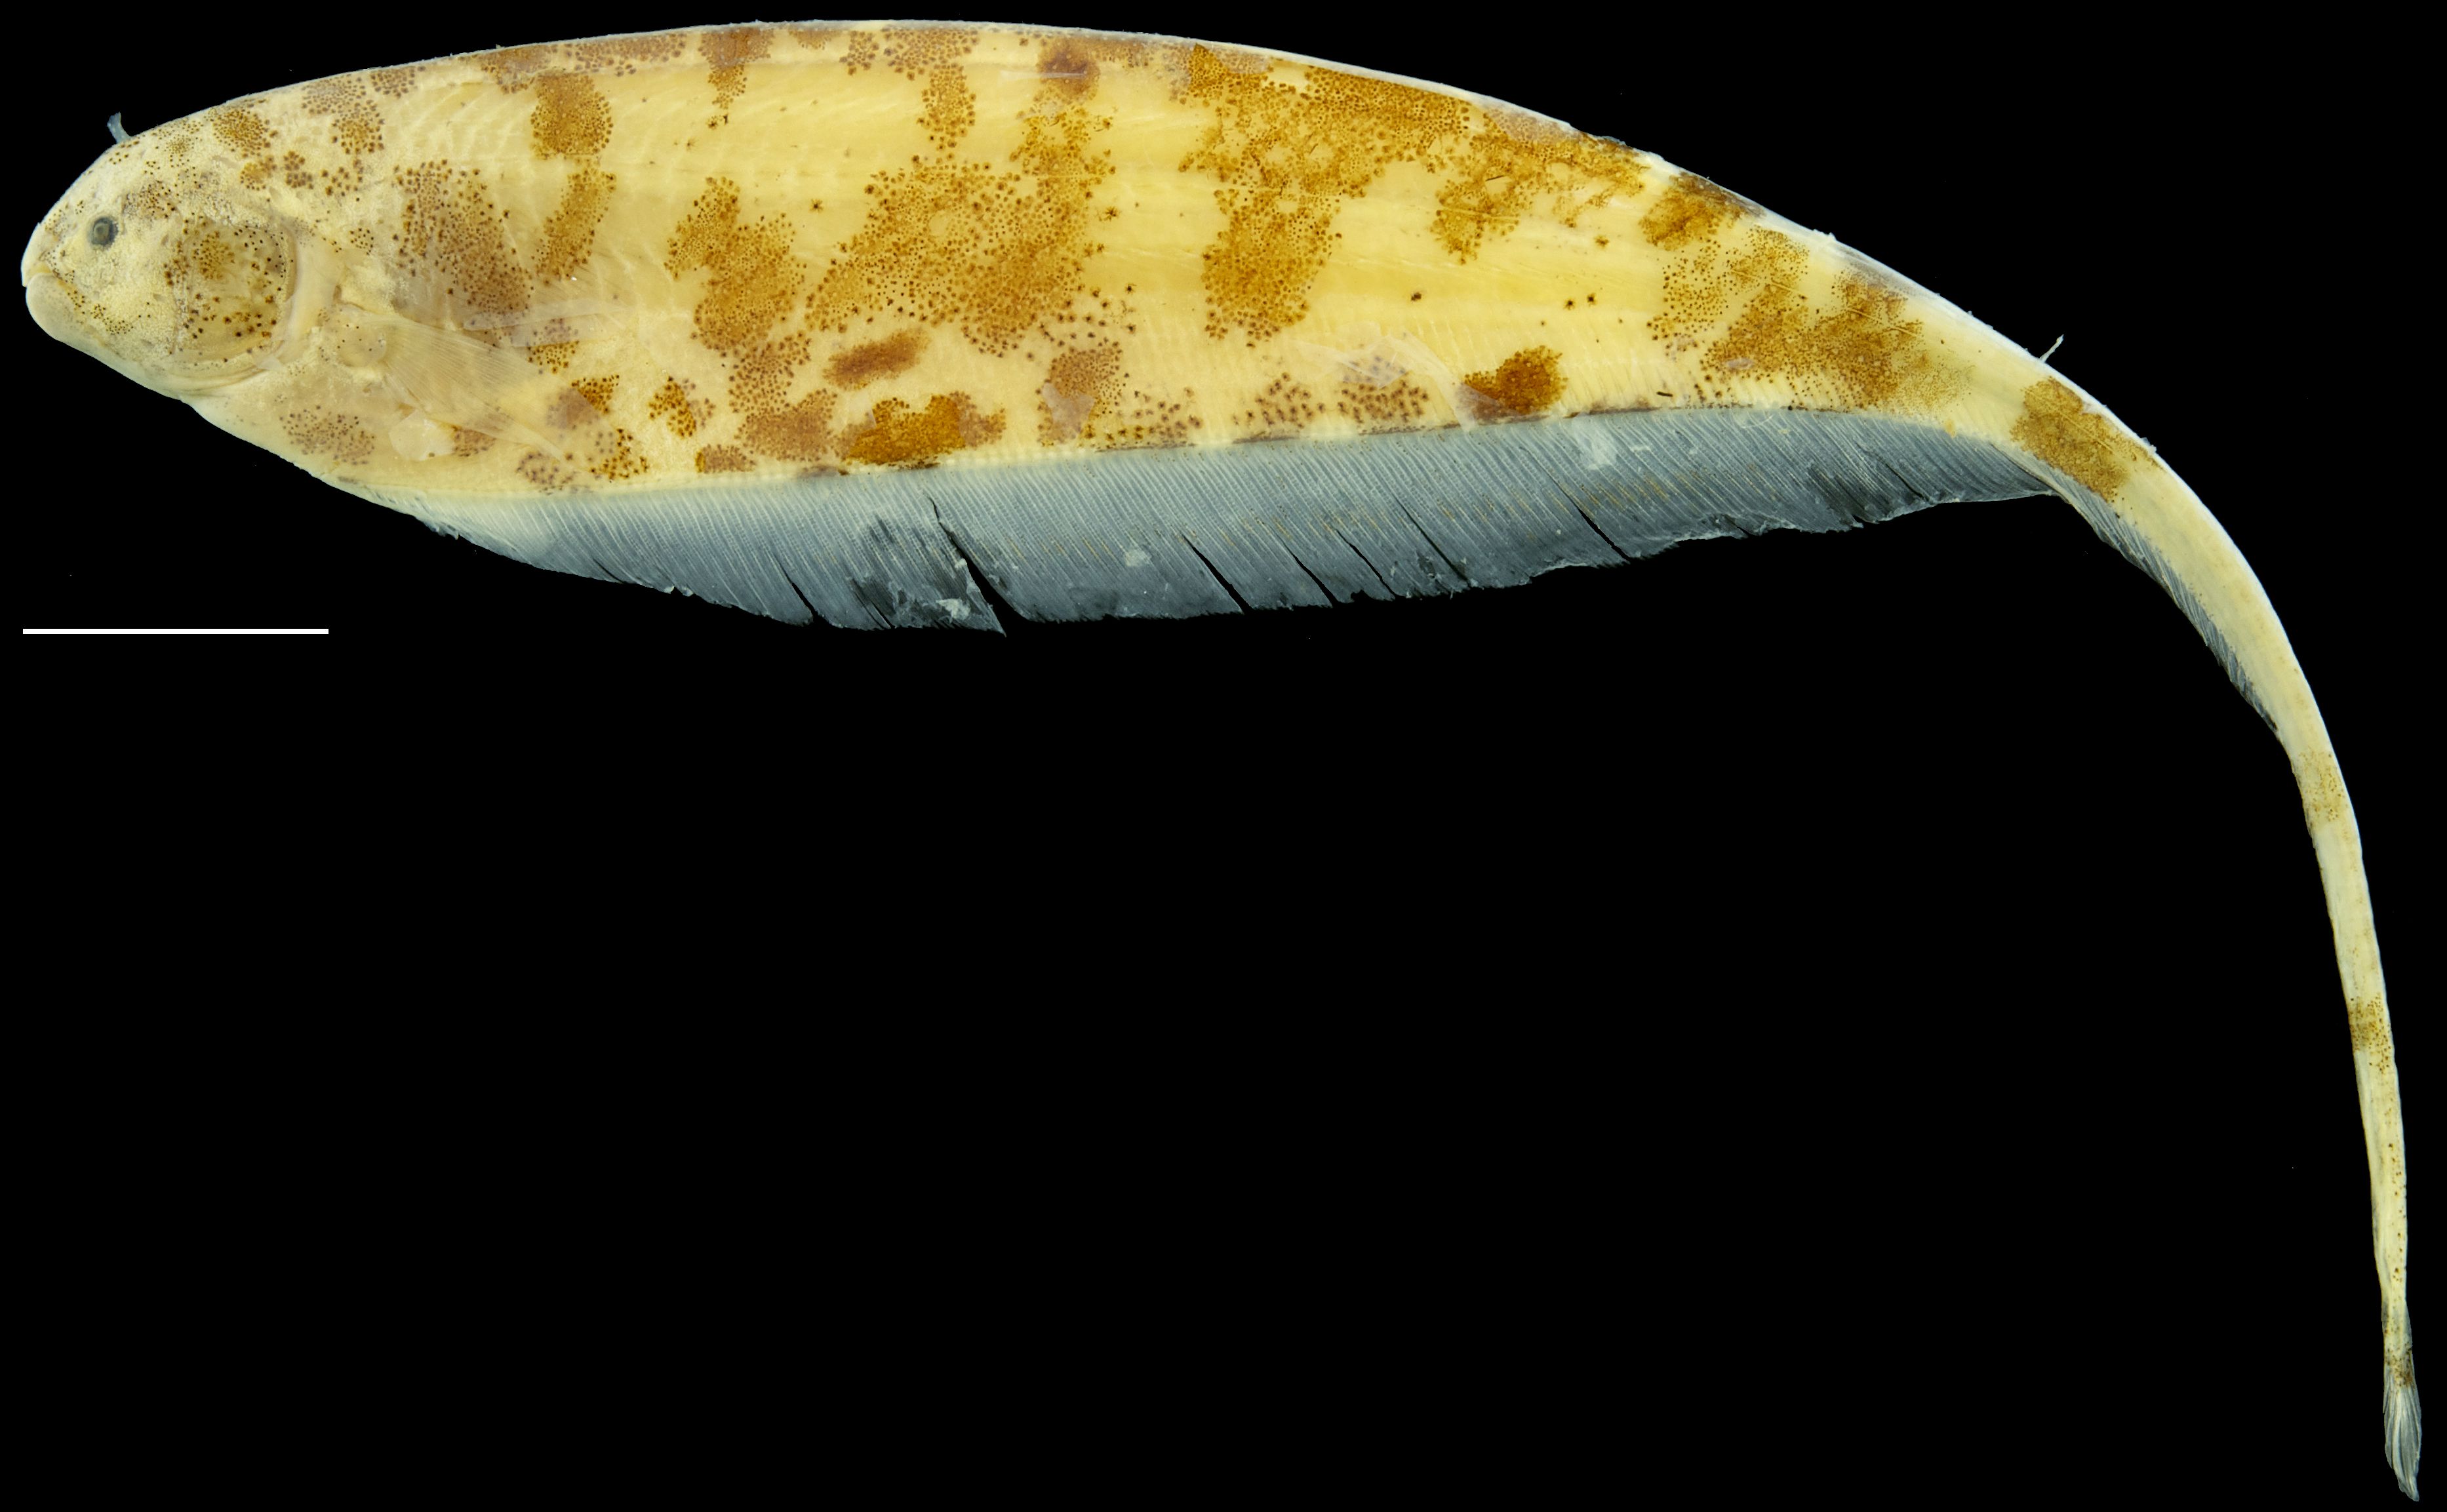 Paratype of <em>Adontosternarchus nebulosus</em>, IAvH-P-8585_Lateral, 106.0 mm TL (scale bar = 1 cm). Photograph by M. H. Sabaj Pérez